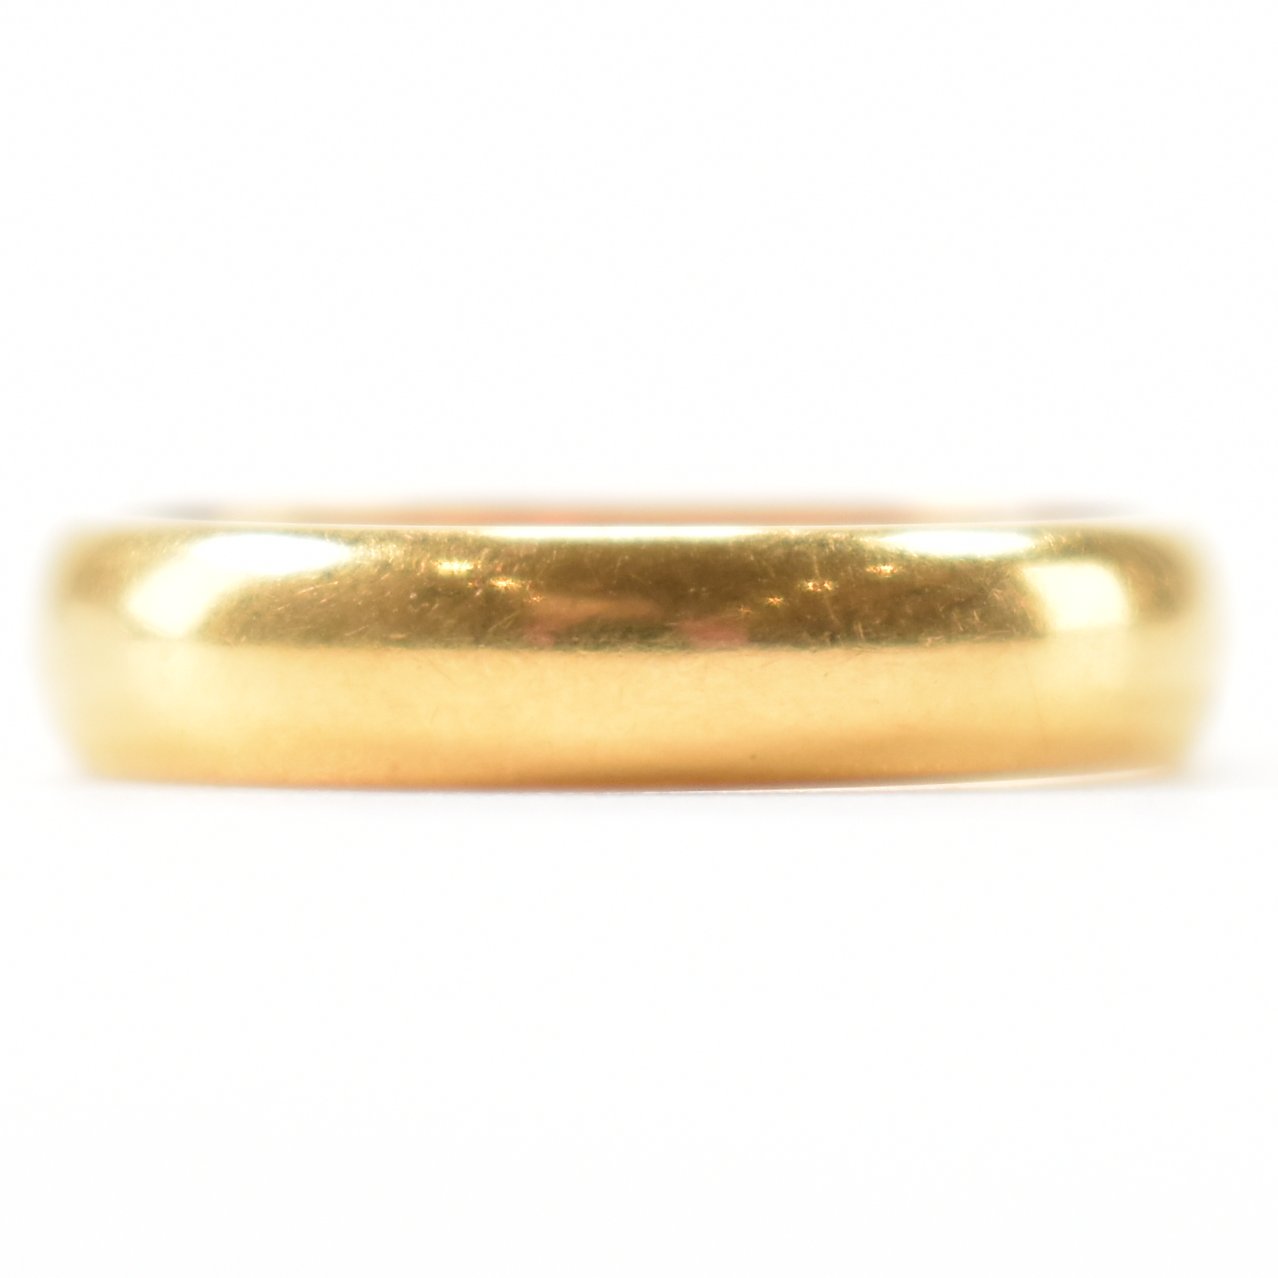 HALLMARKED 22CT GOLD WEDDING BAND RING - Image 3 of 6